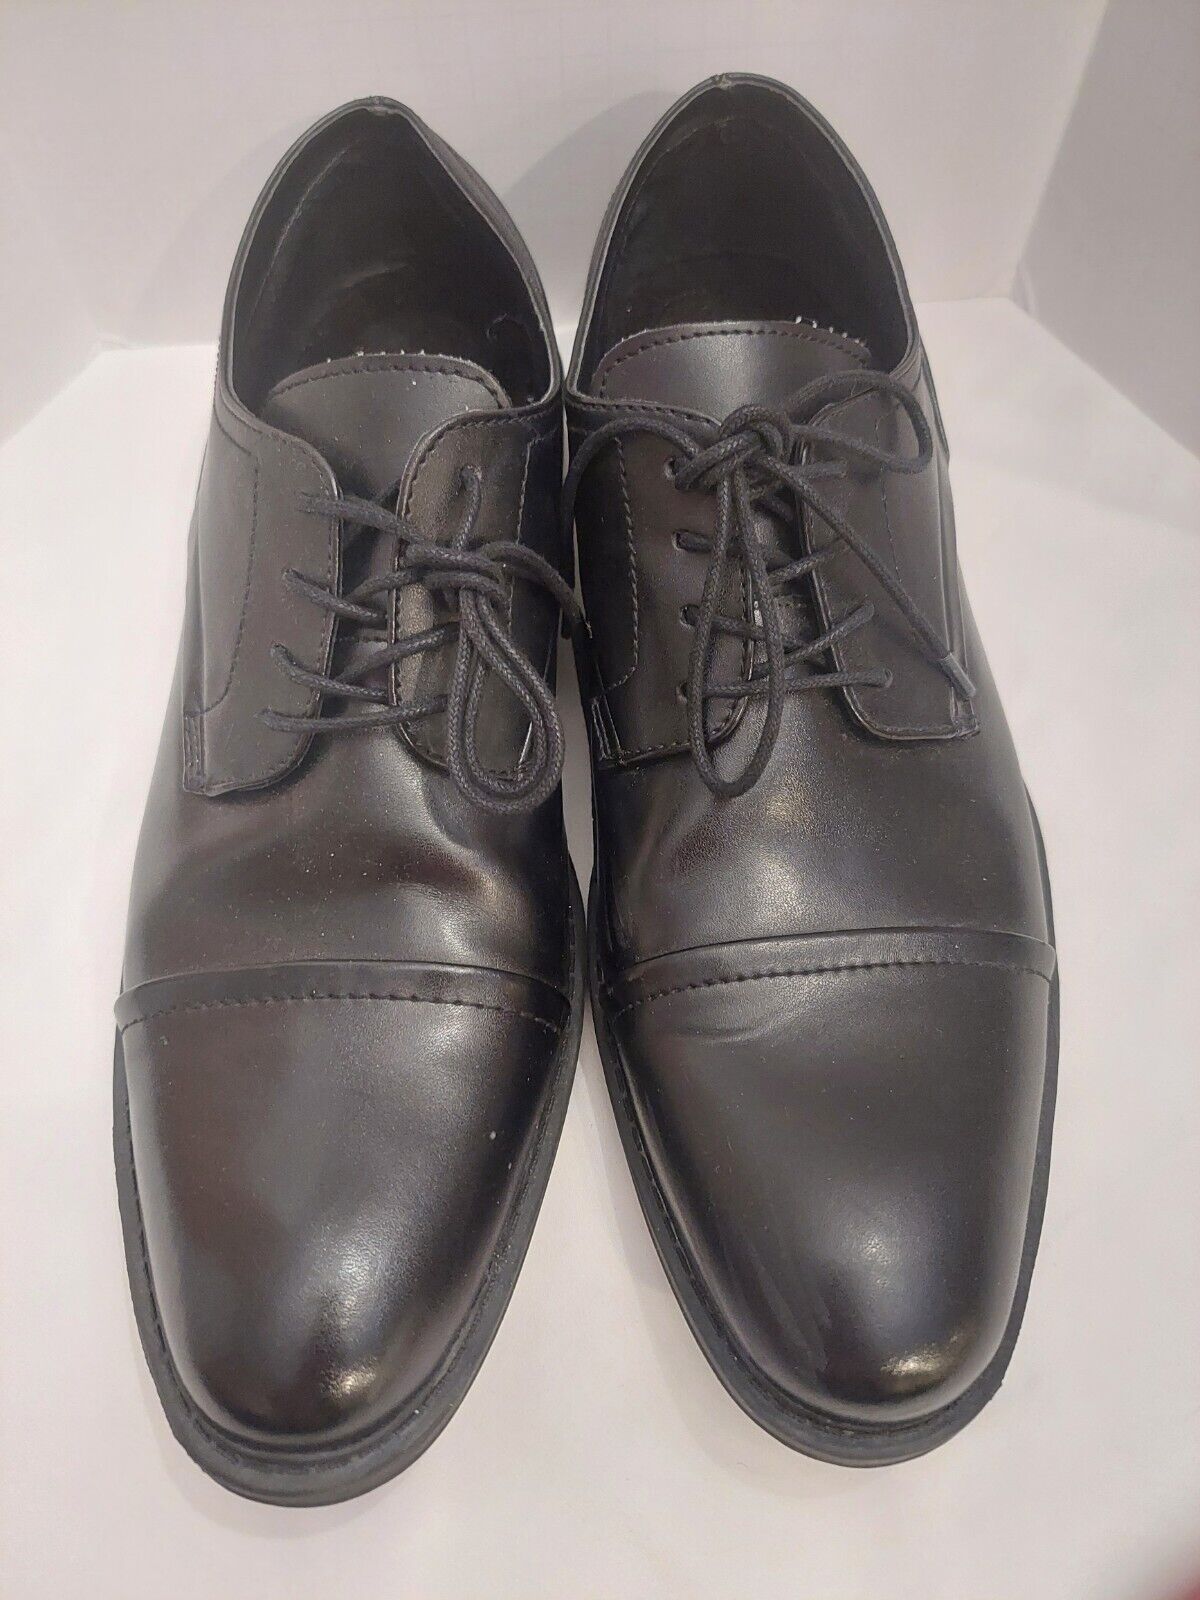 Calvin Klein Mens Size 12 Lace Up Oxfords Cap Toe Business Casual Dress  Shoes | eBay